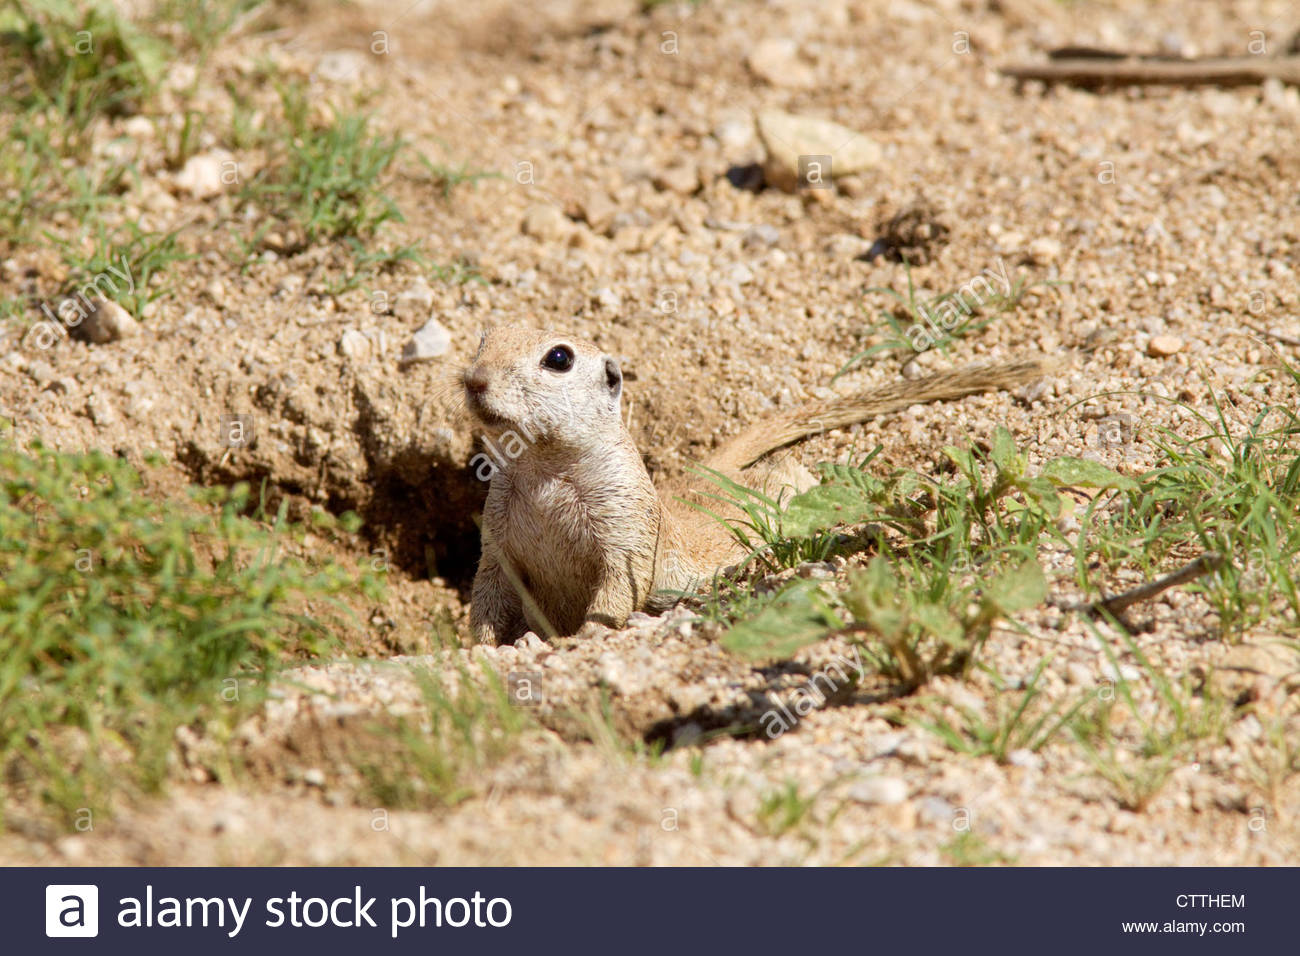 round-tailed-ground-squirrel-spermophilus-tereticaudus-arizona-CTTHEM.jpg